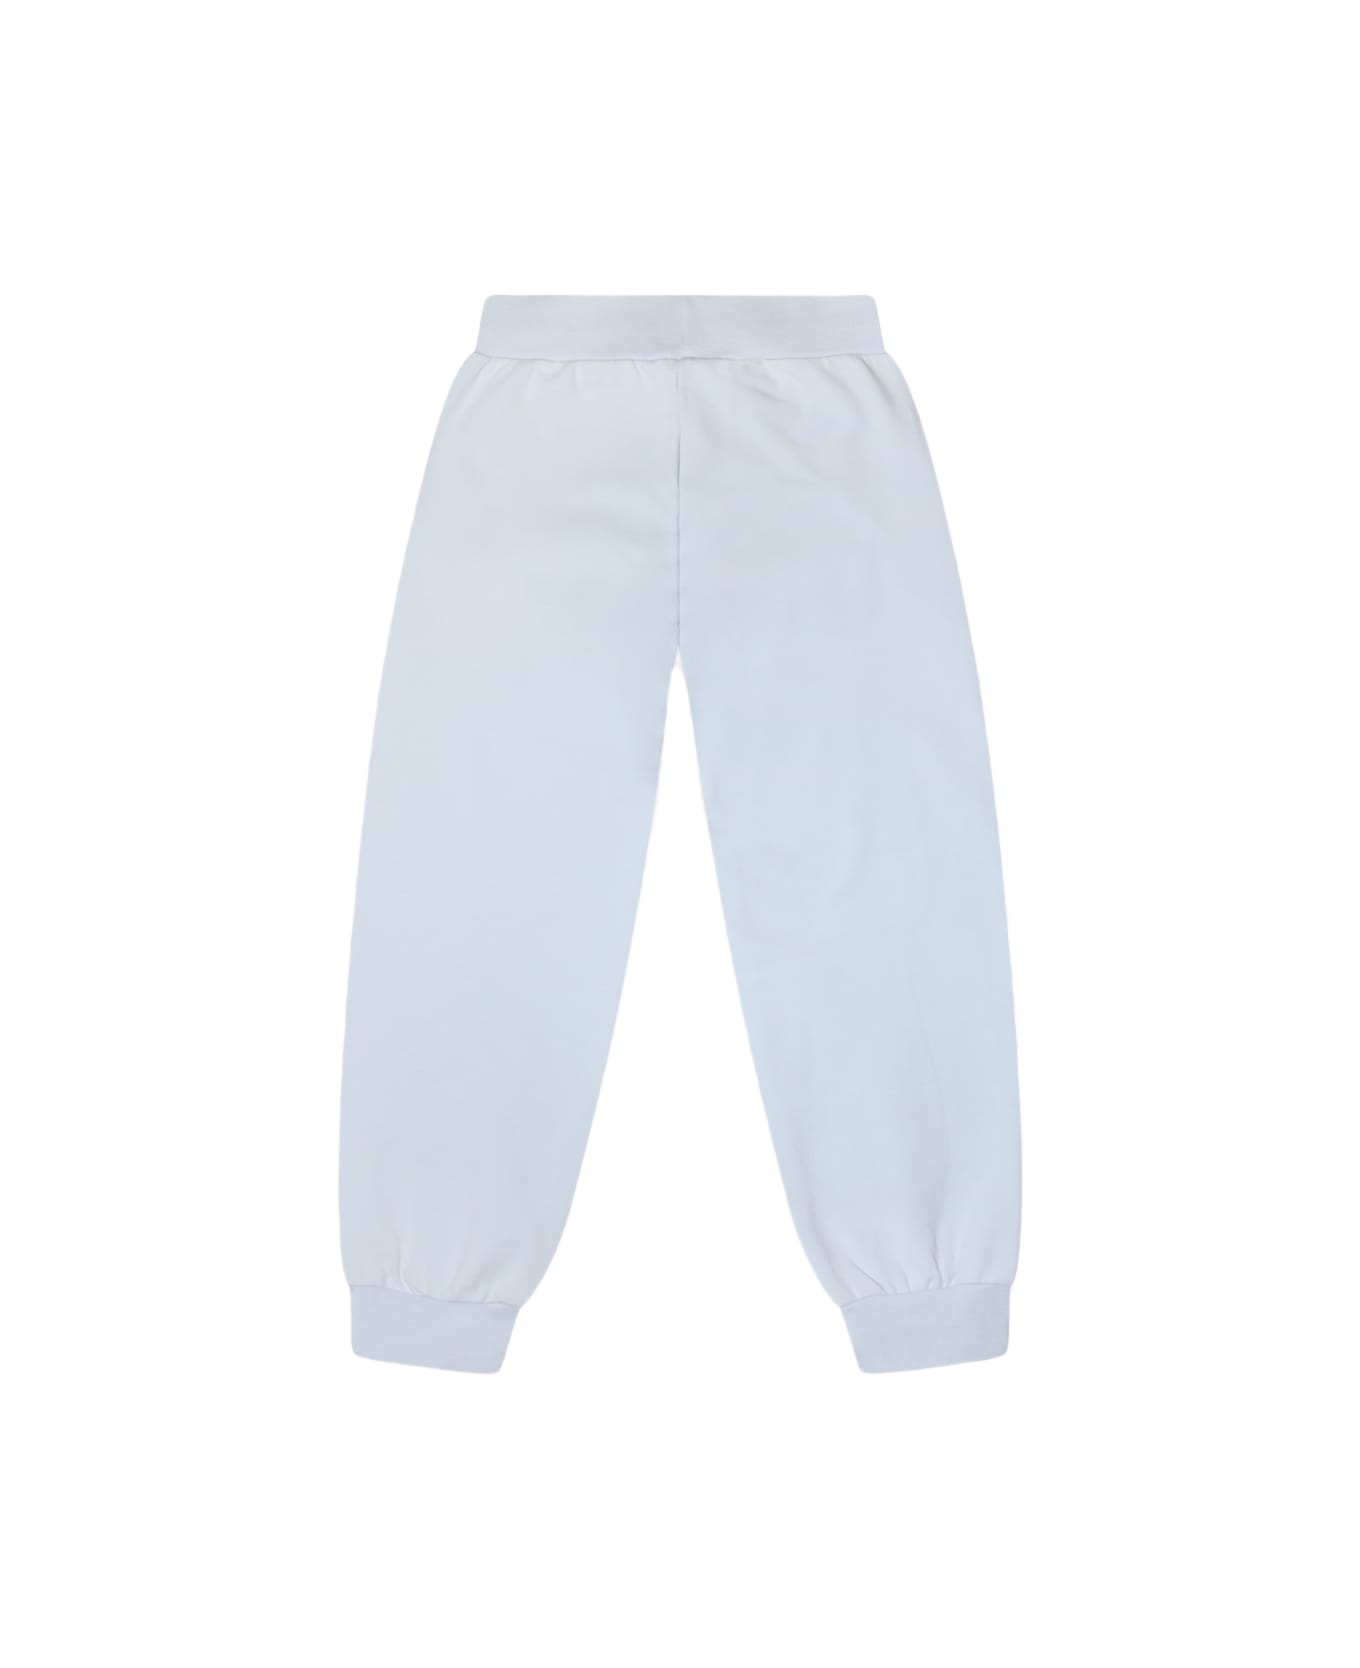 Monnalisa Light Blue Cotton Track Pants - Grey ボトムス